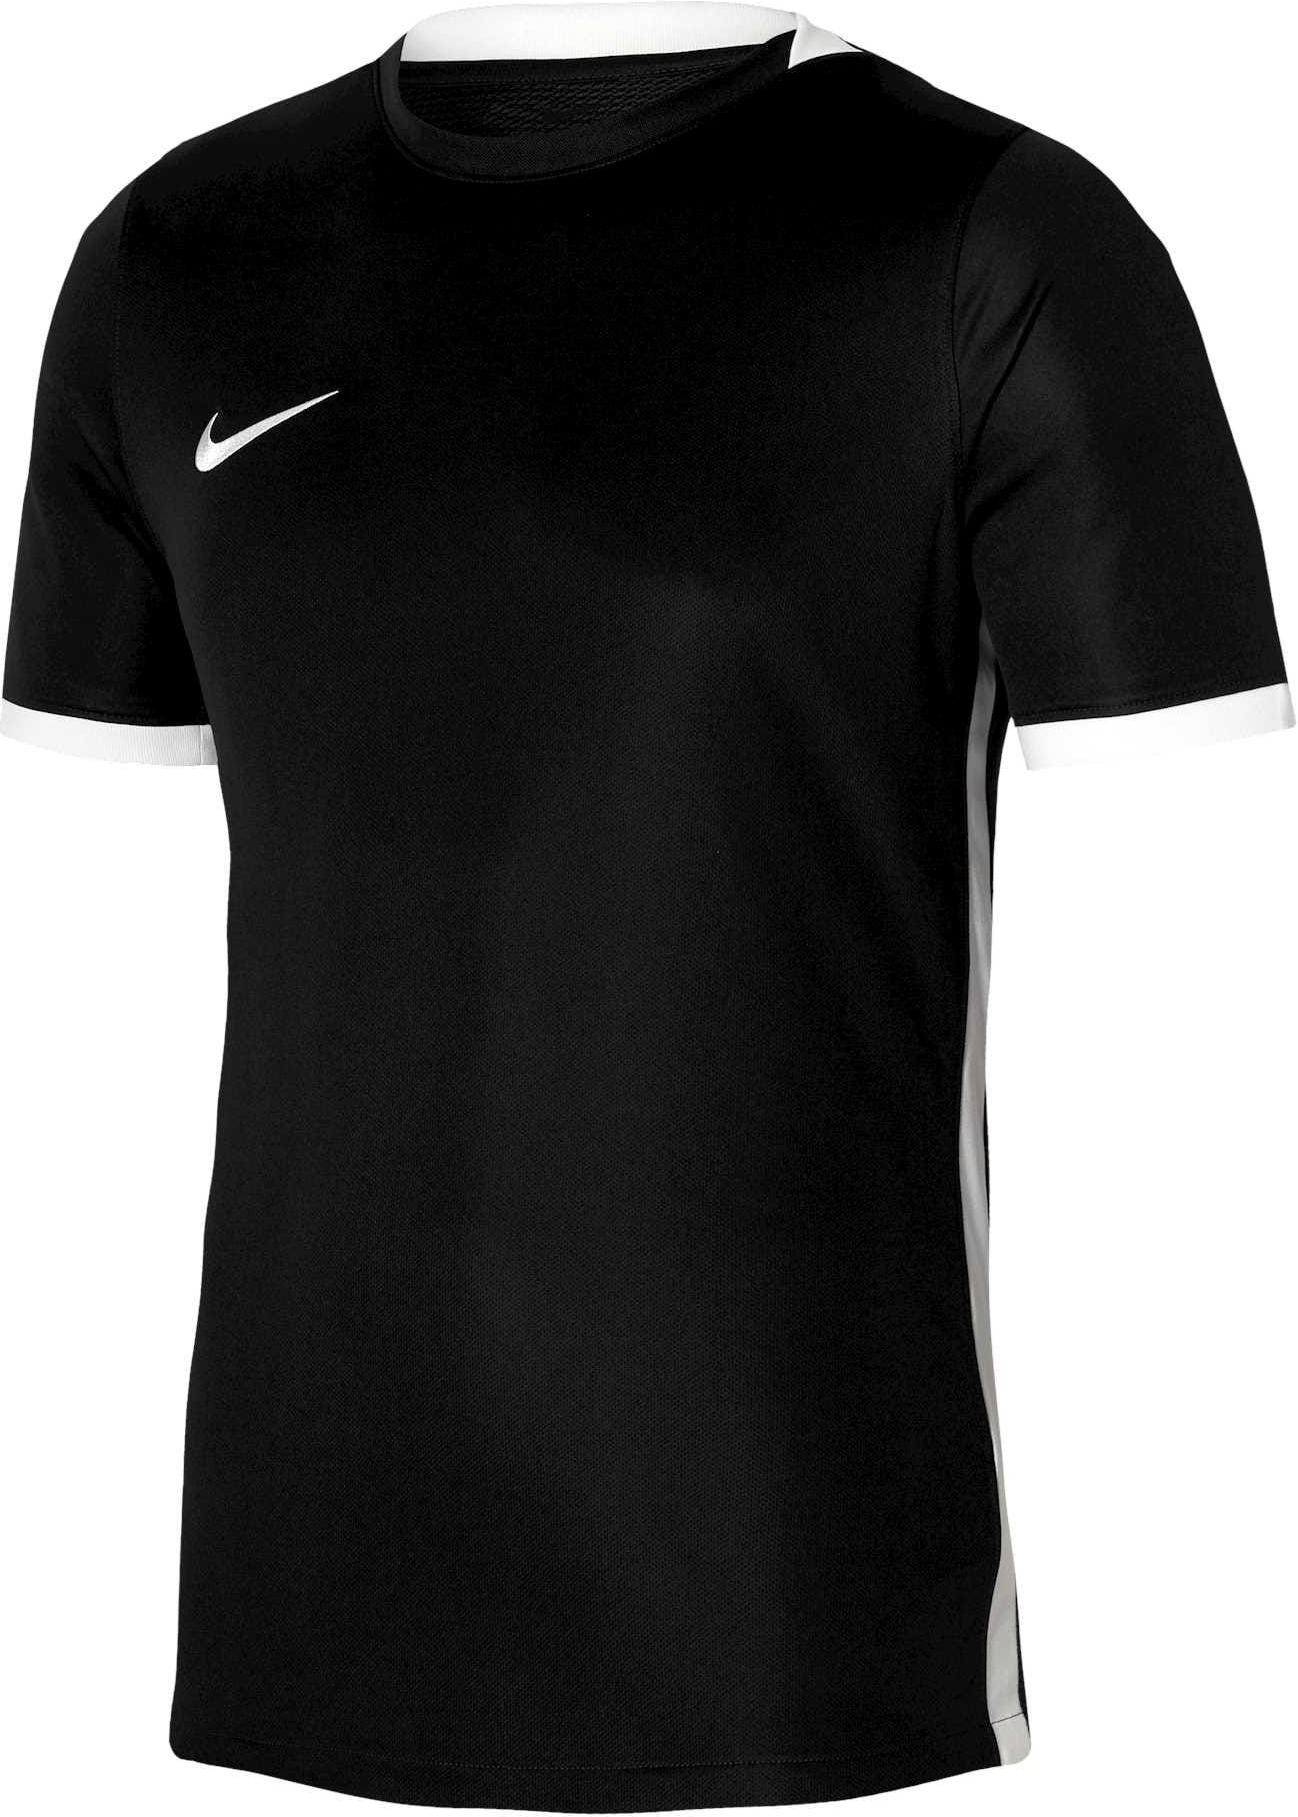 Shirt Nike Dri-FIT Challenge 4 Men s Soccer Jersey